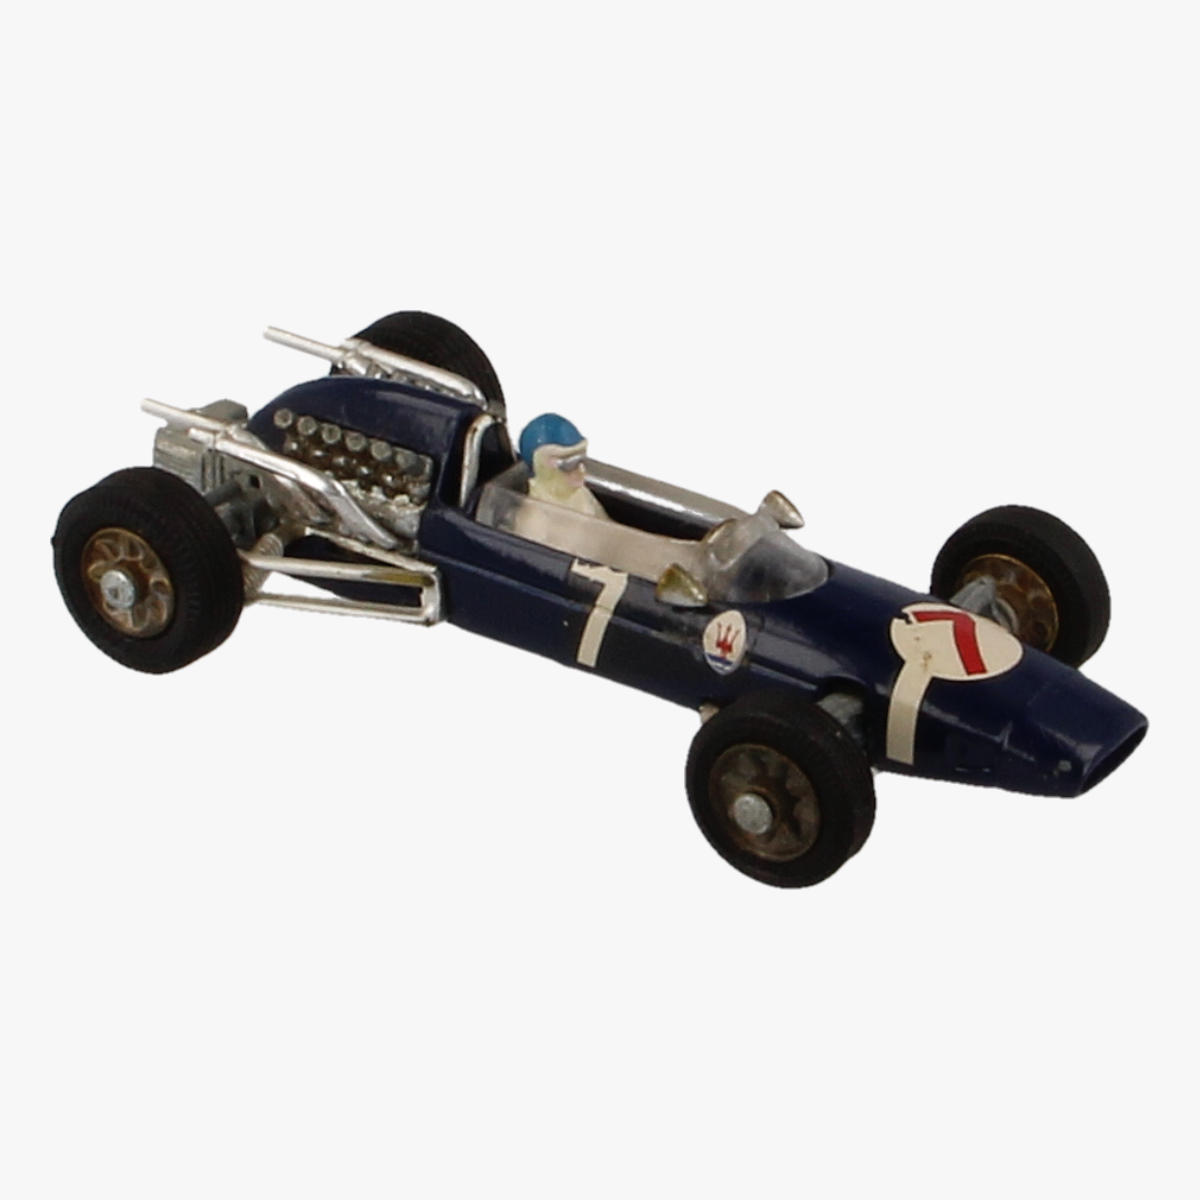 Afbeeldingen van Corgi Toys. Cooper Maserati F/1 156